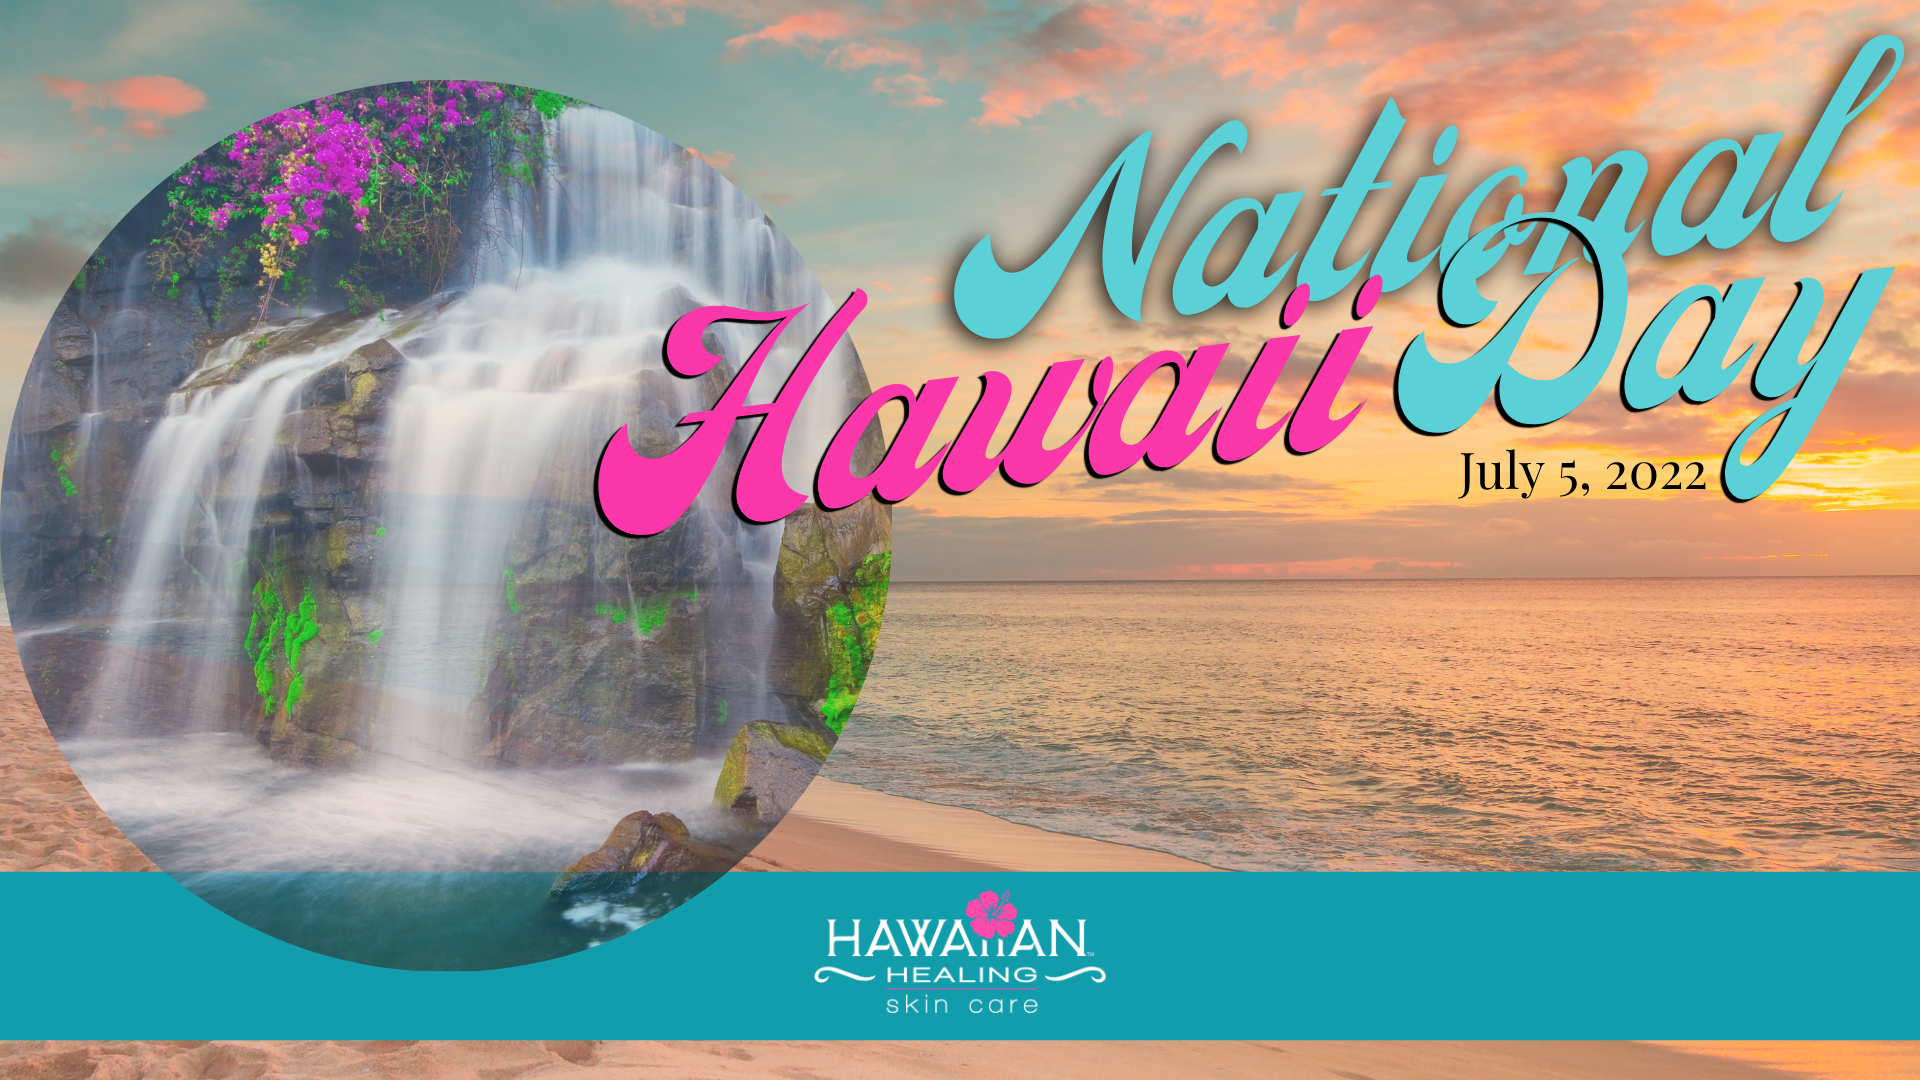 National Hawaii Day 2022